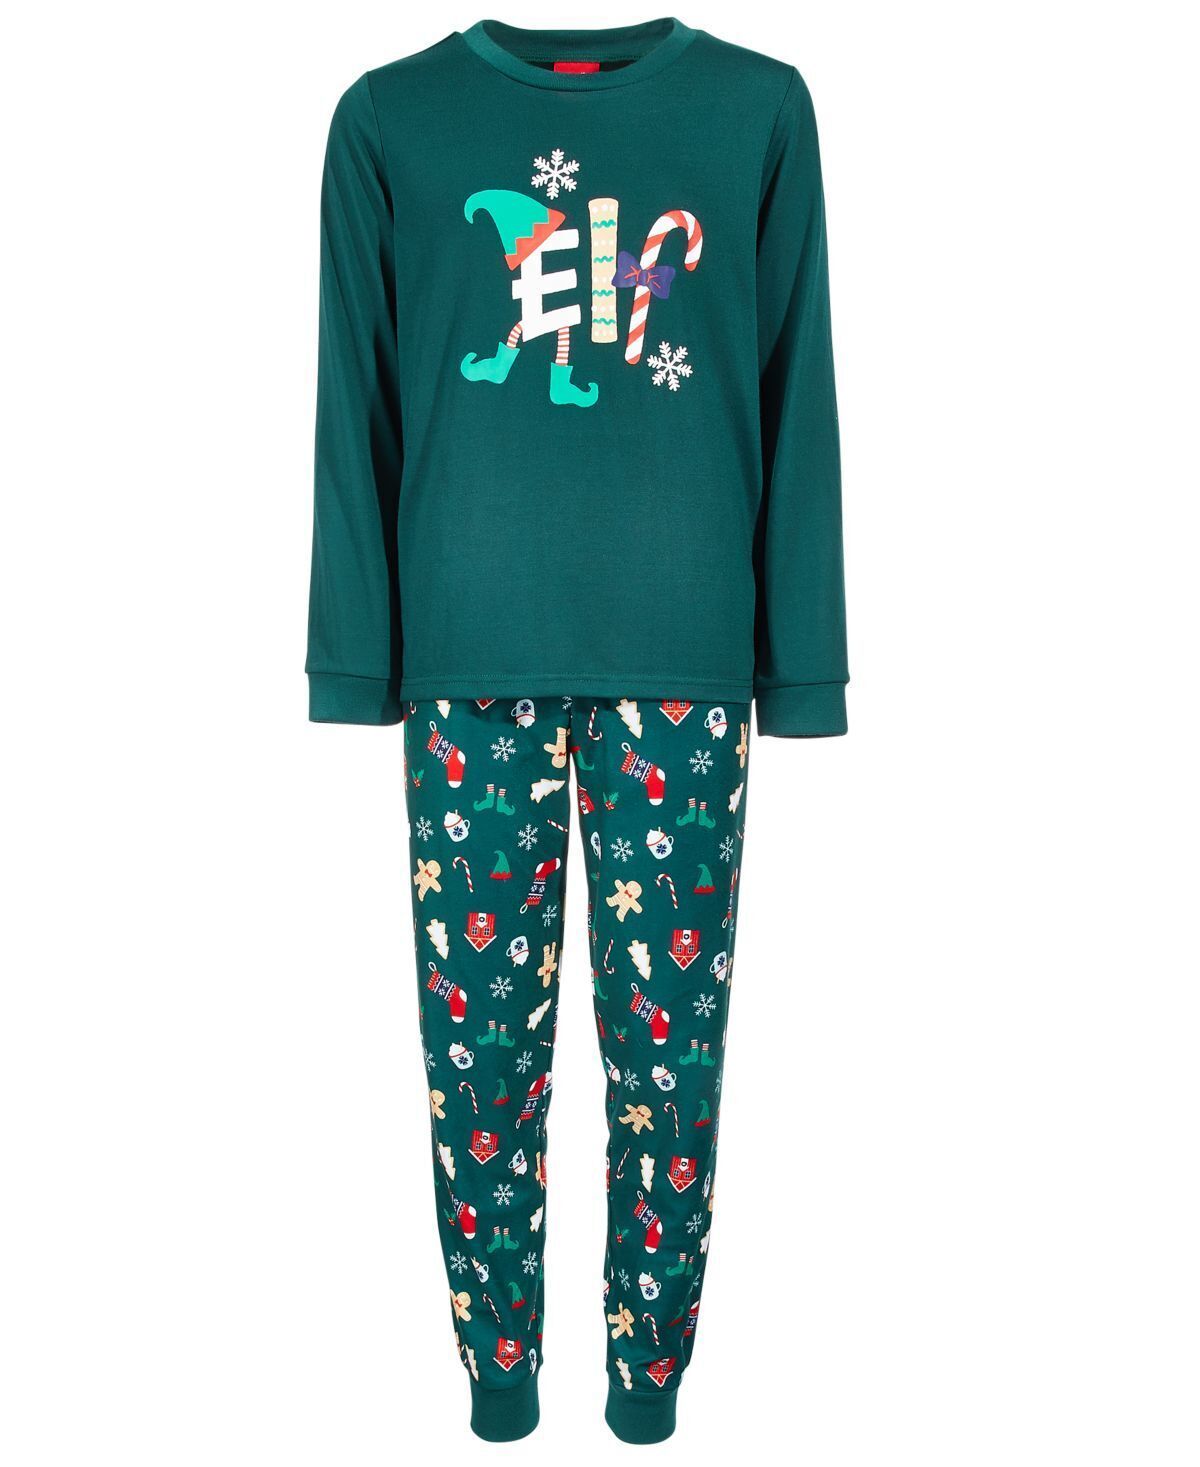 Primary image for allbrand365 designer Little & Big Kids 2 Pieces Pajama Set,Elfing Merry,8